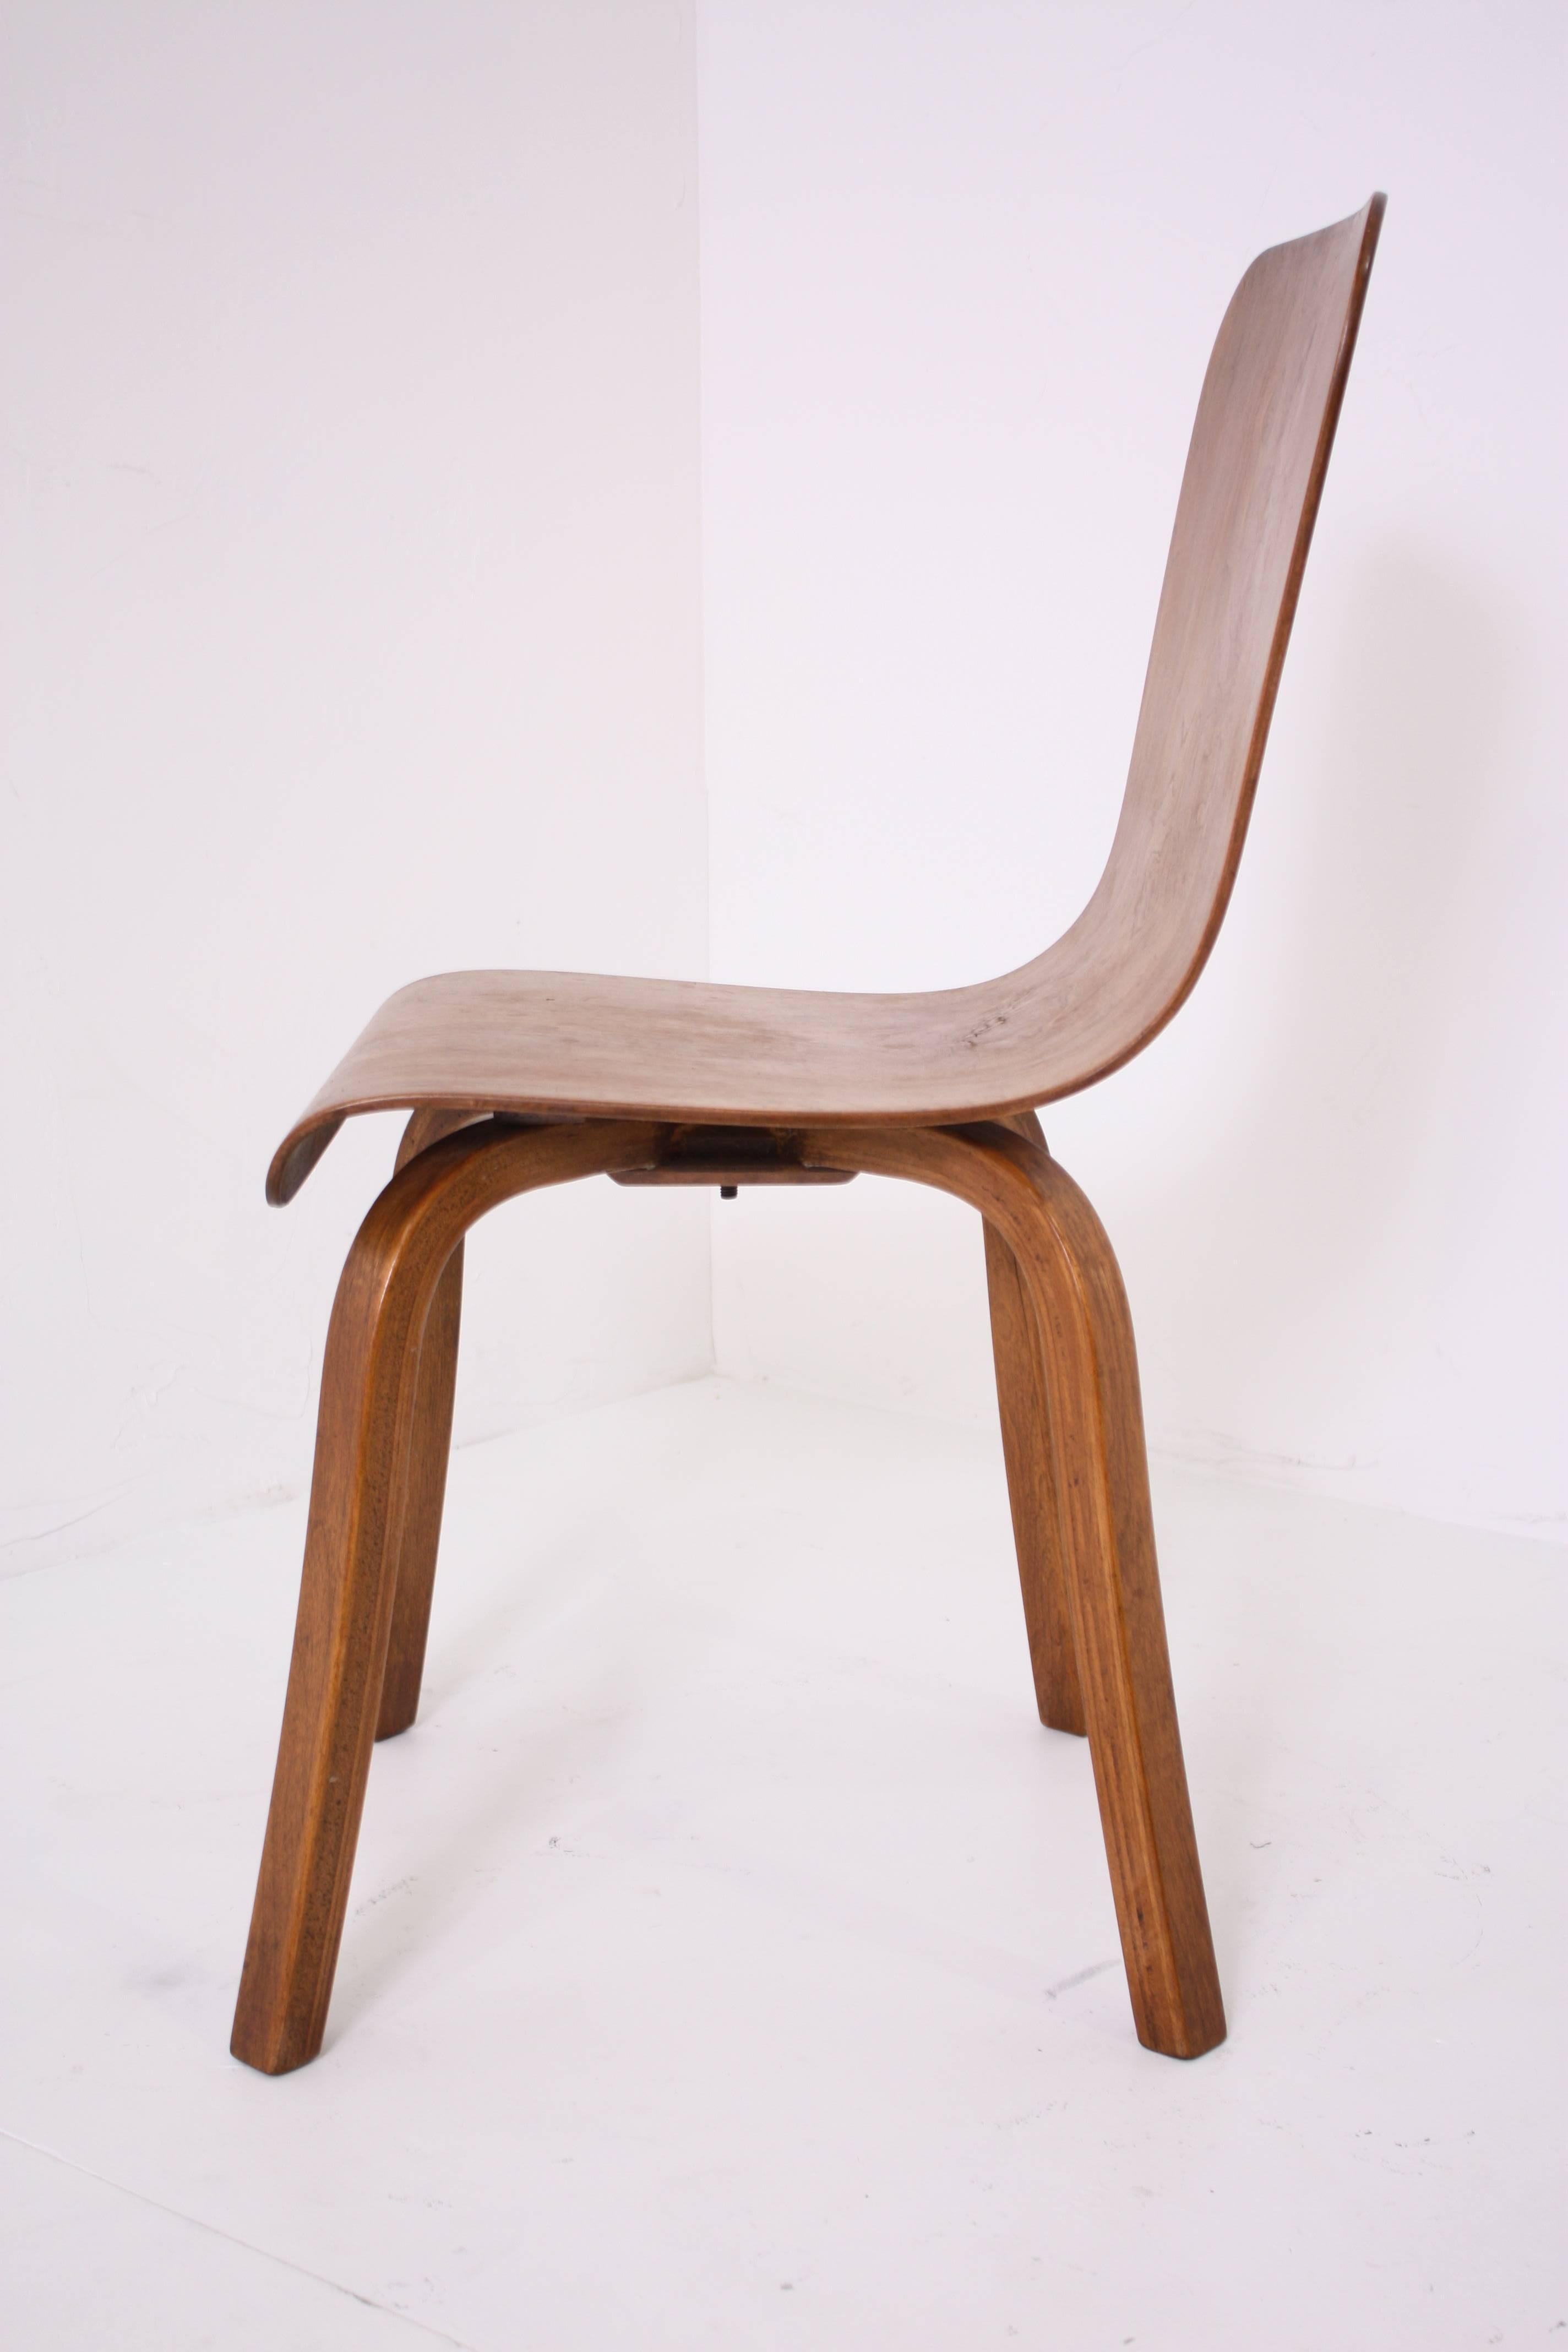 Canadian Bentwood Side Chair by Czerwinski-Stylolt